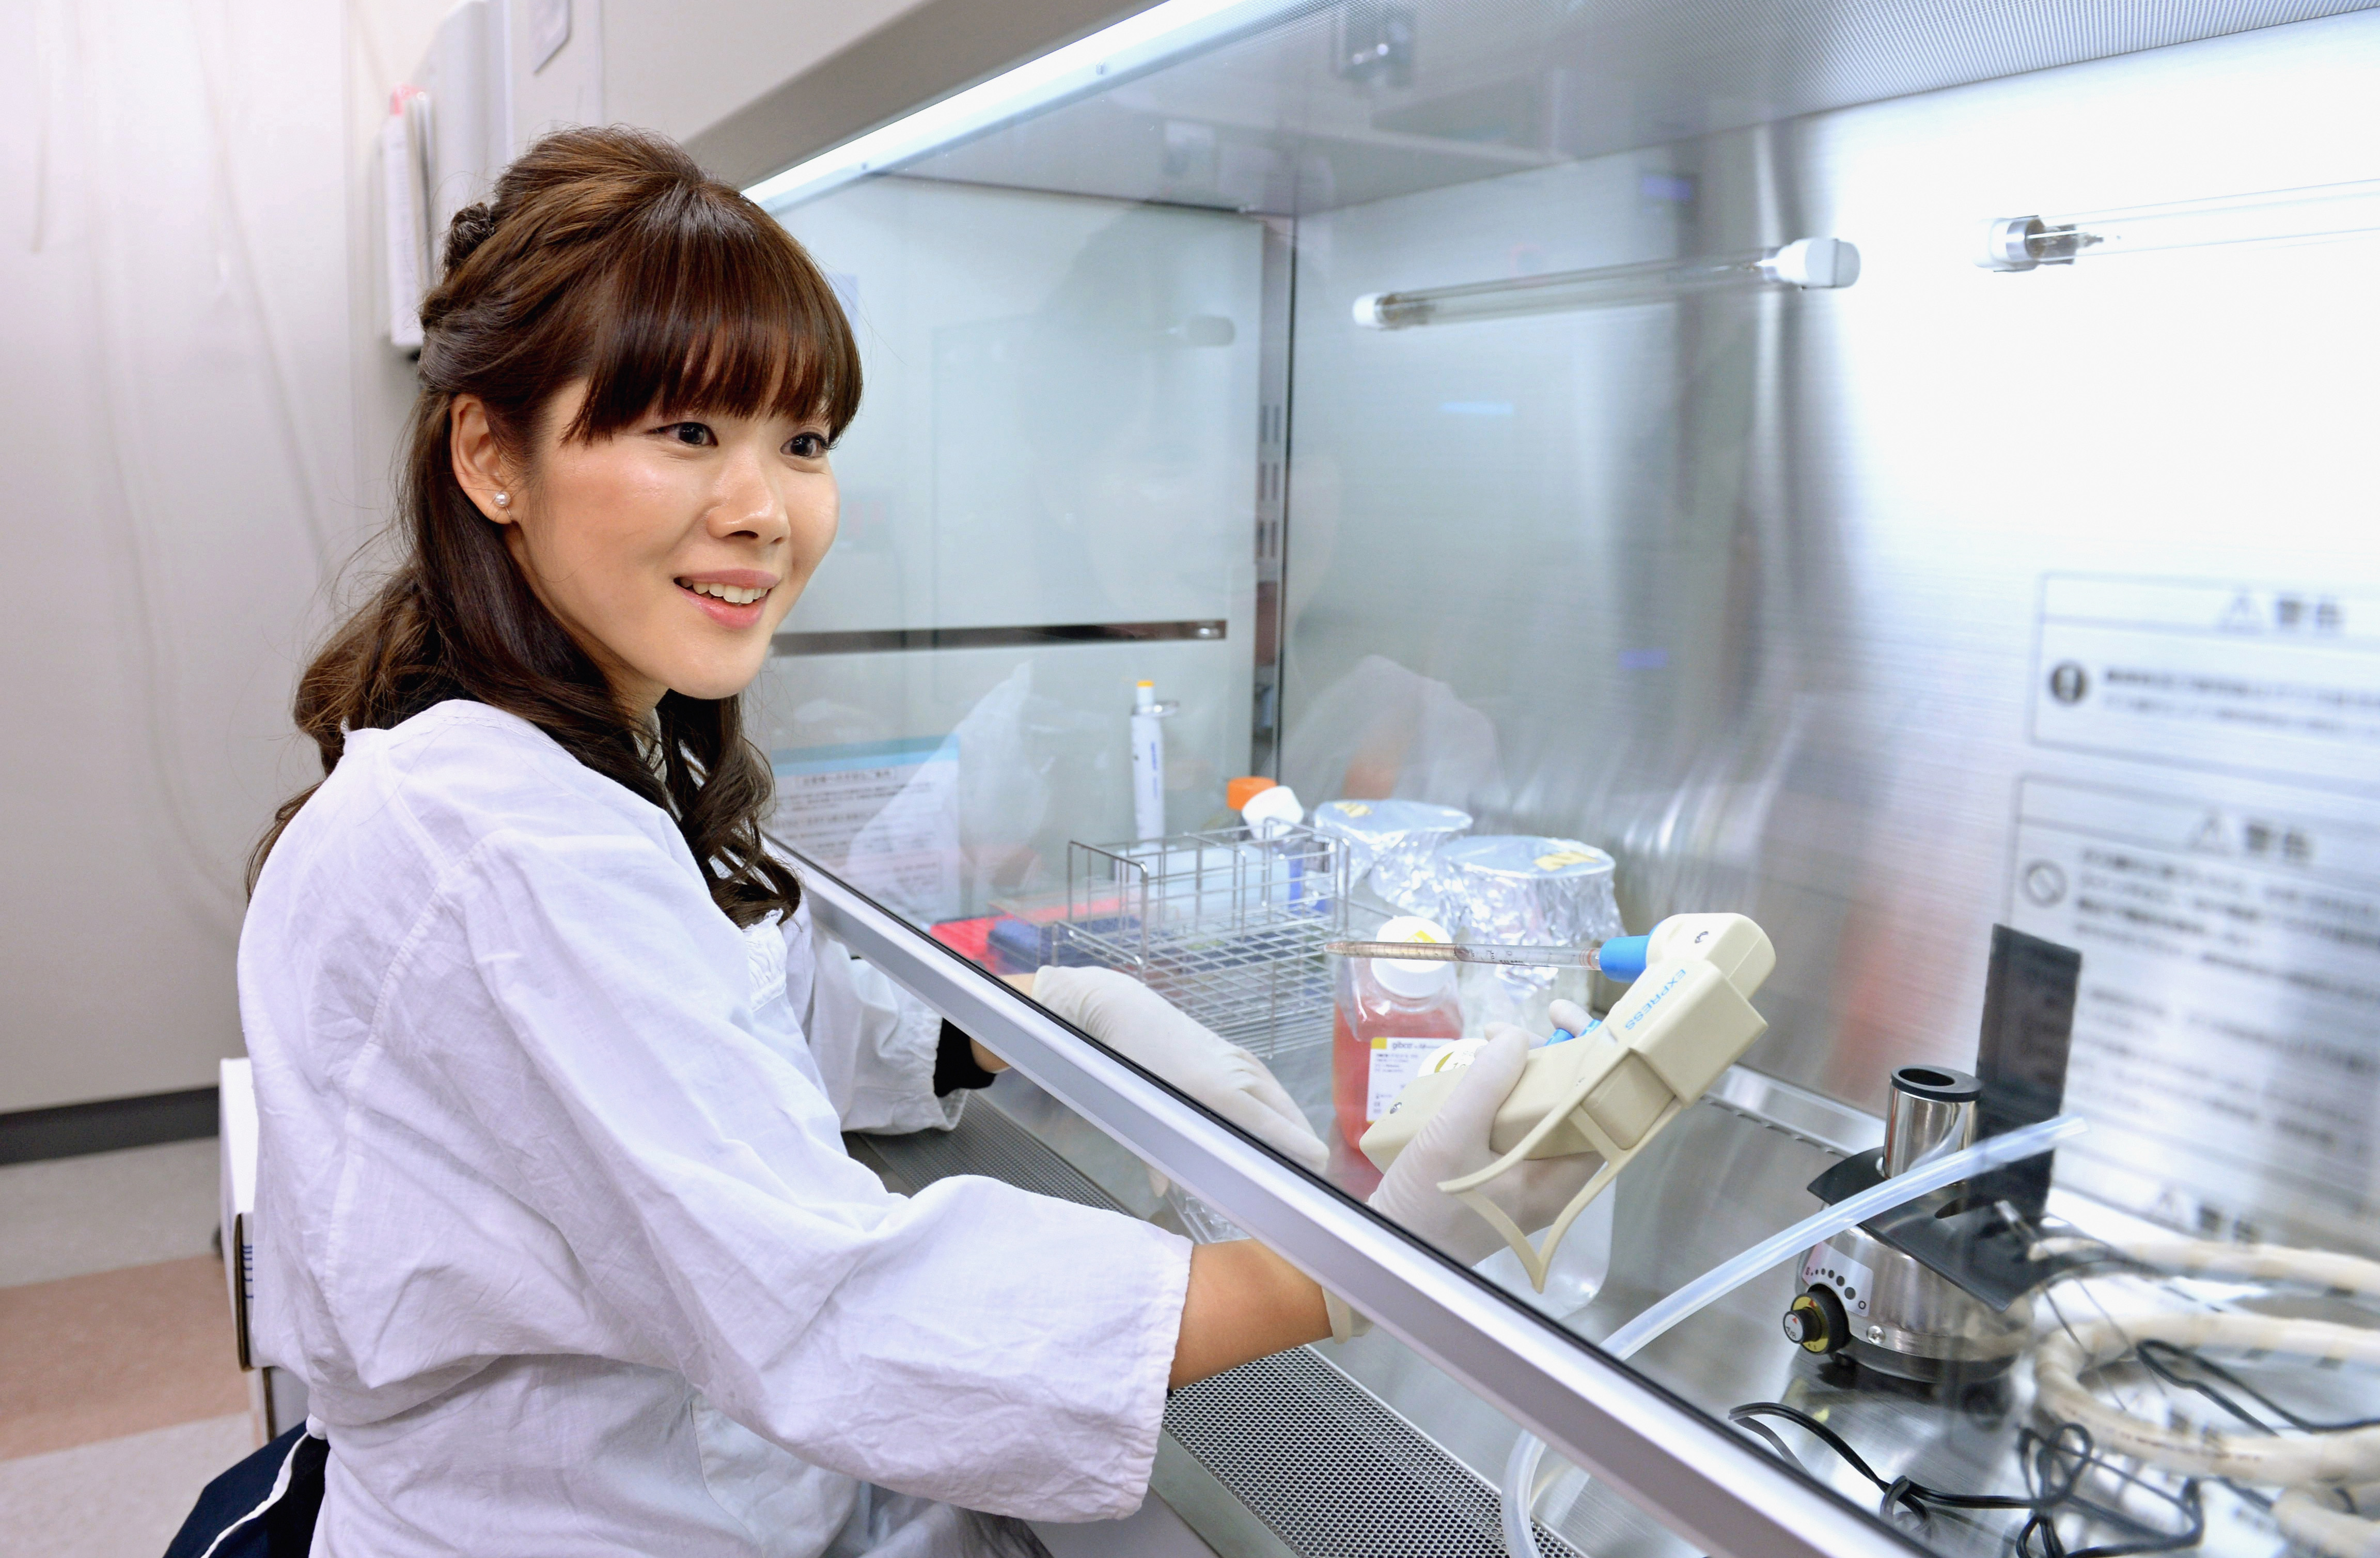 Japanese biologist Haruko Obokata in her laboratory at the Riken Center for Developmental Biology in Kobe, Japan, on Jan. 28, 2014 (The Asahi Shimbun/Getty Images)